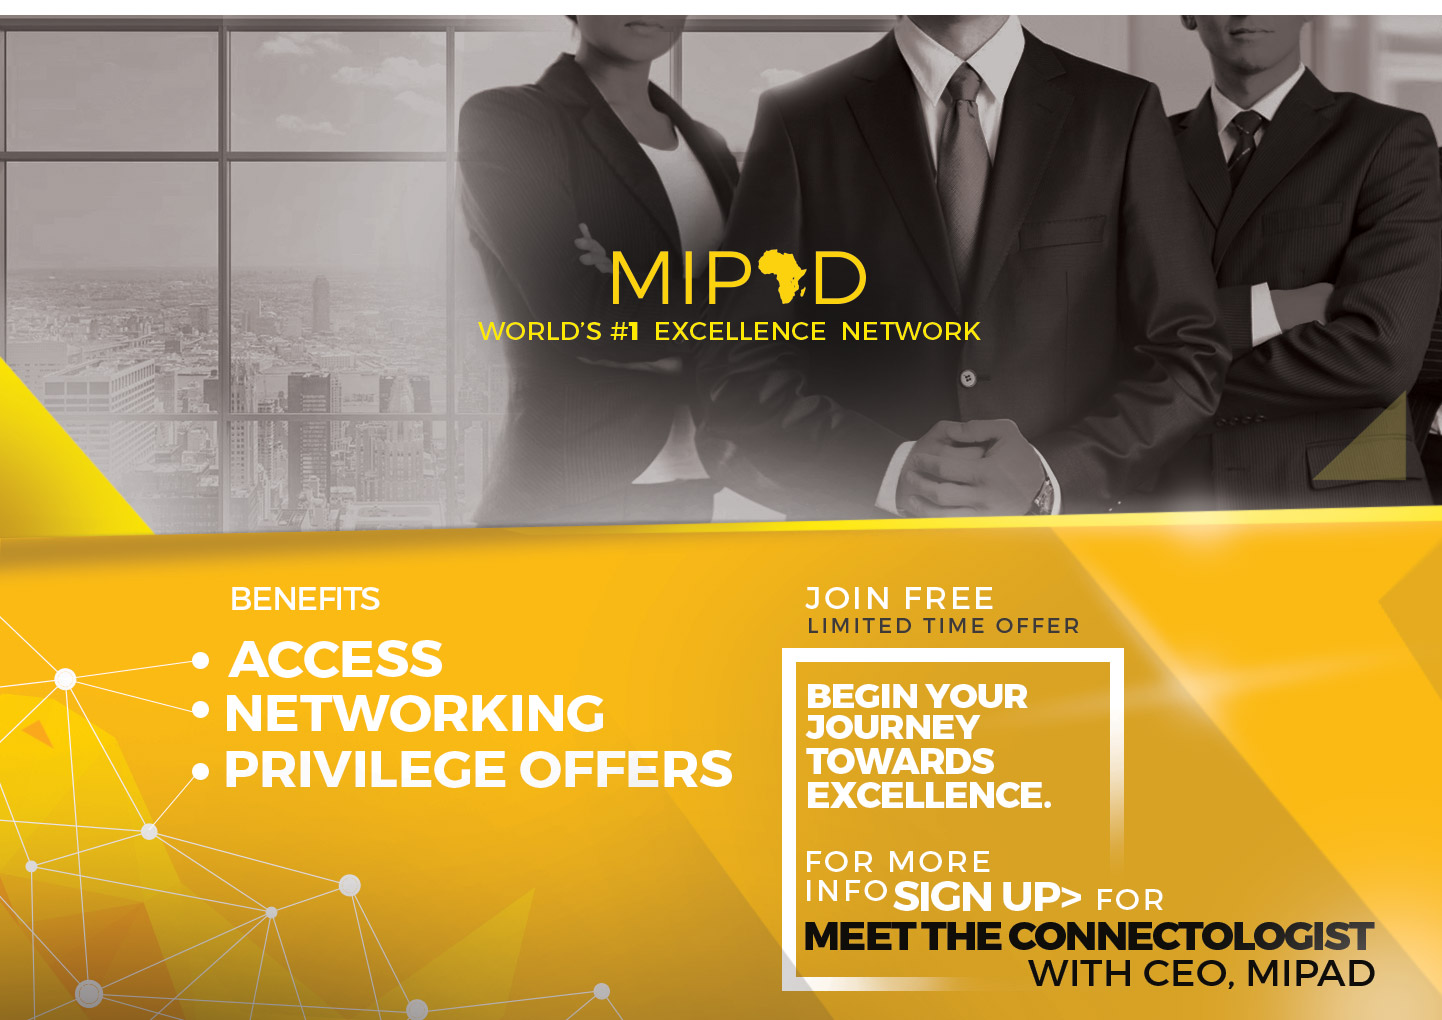 MIPAD Global Network Benefits